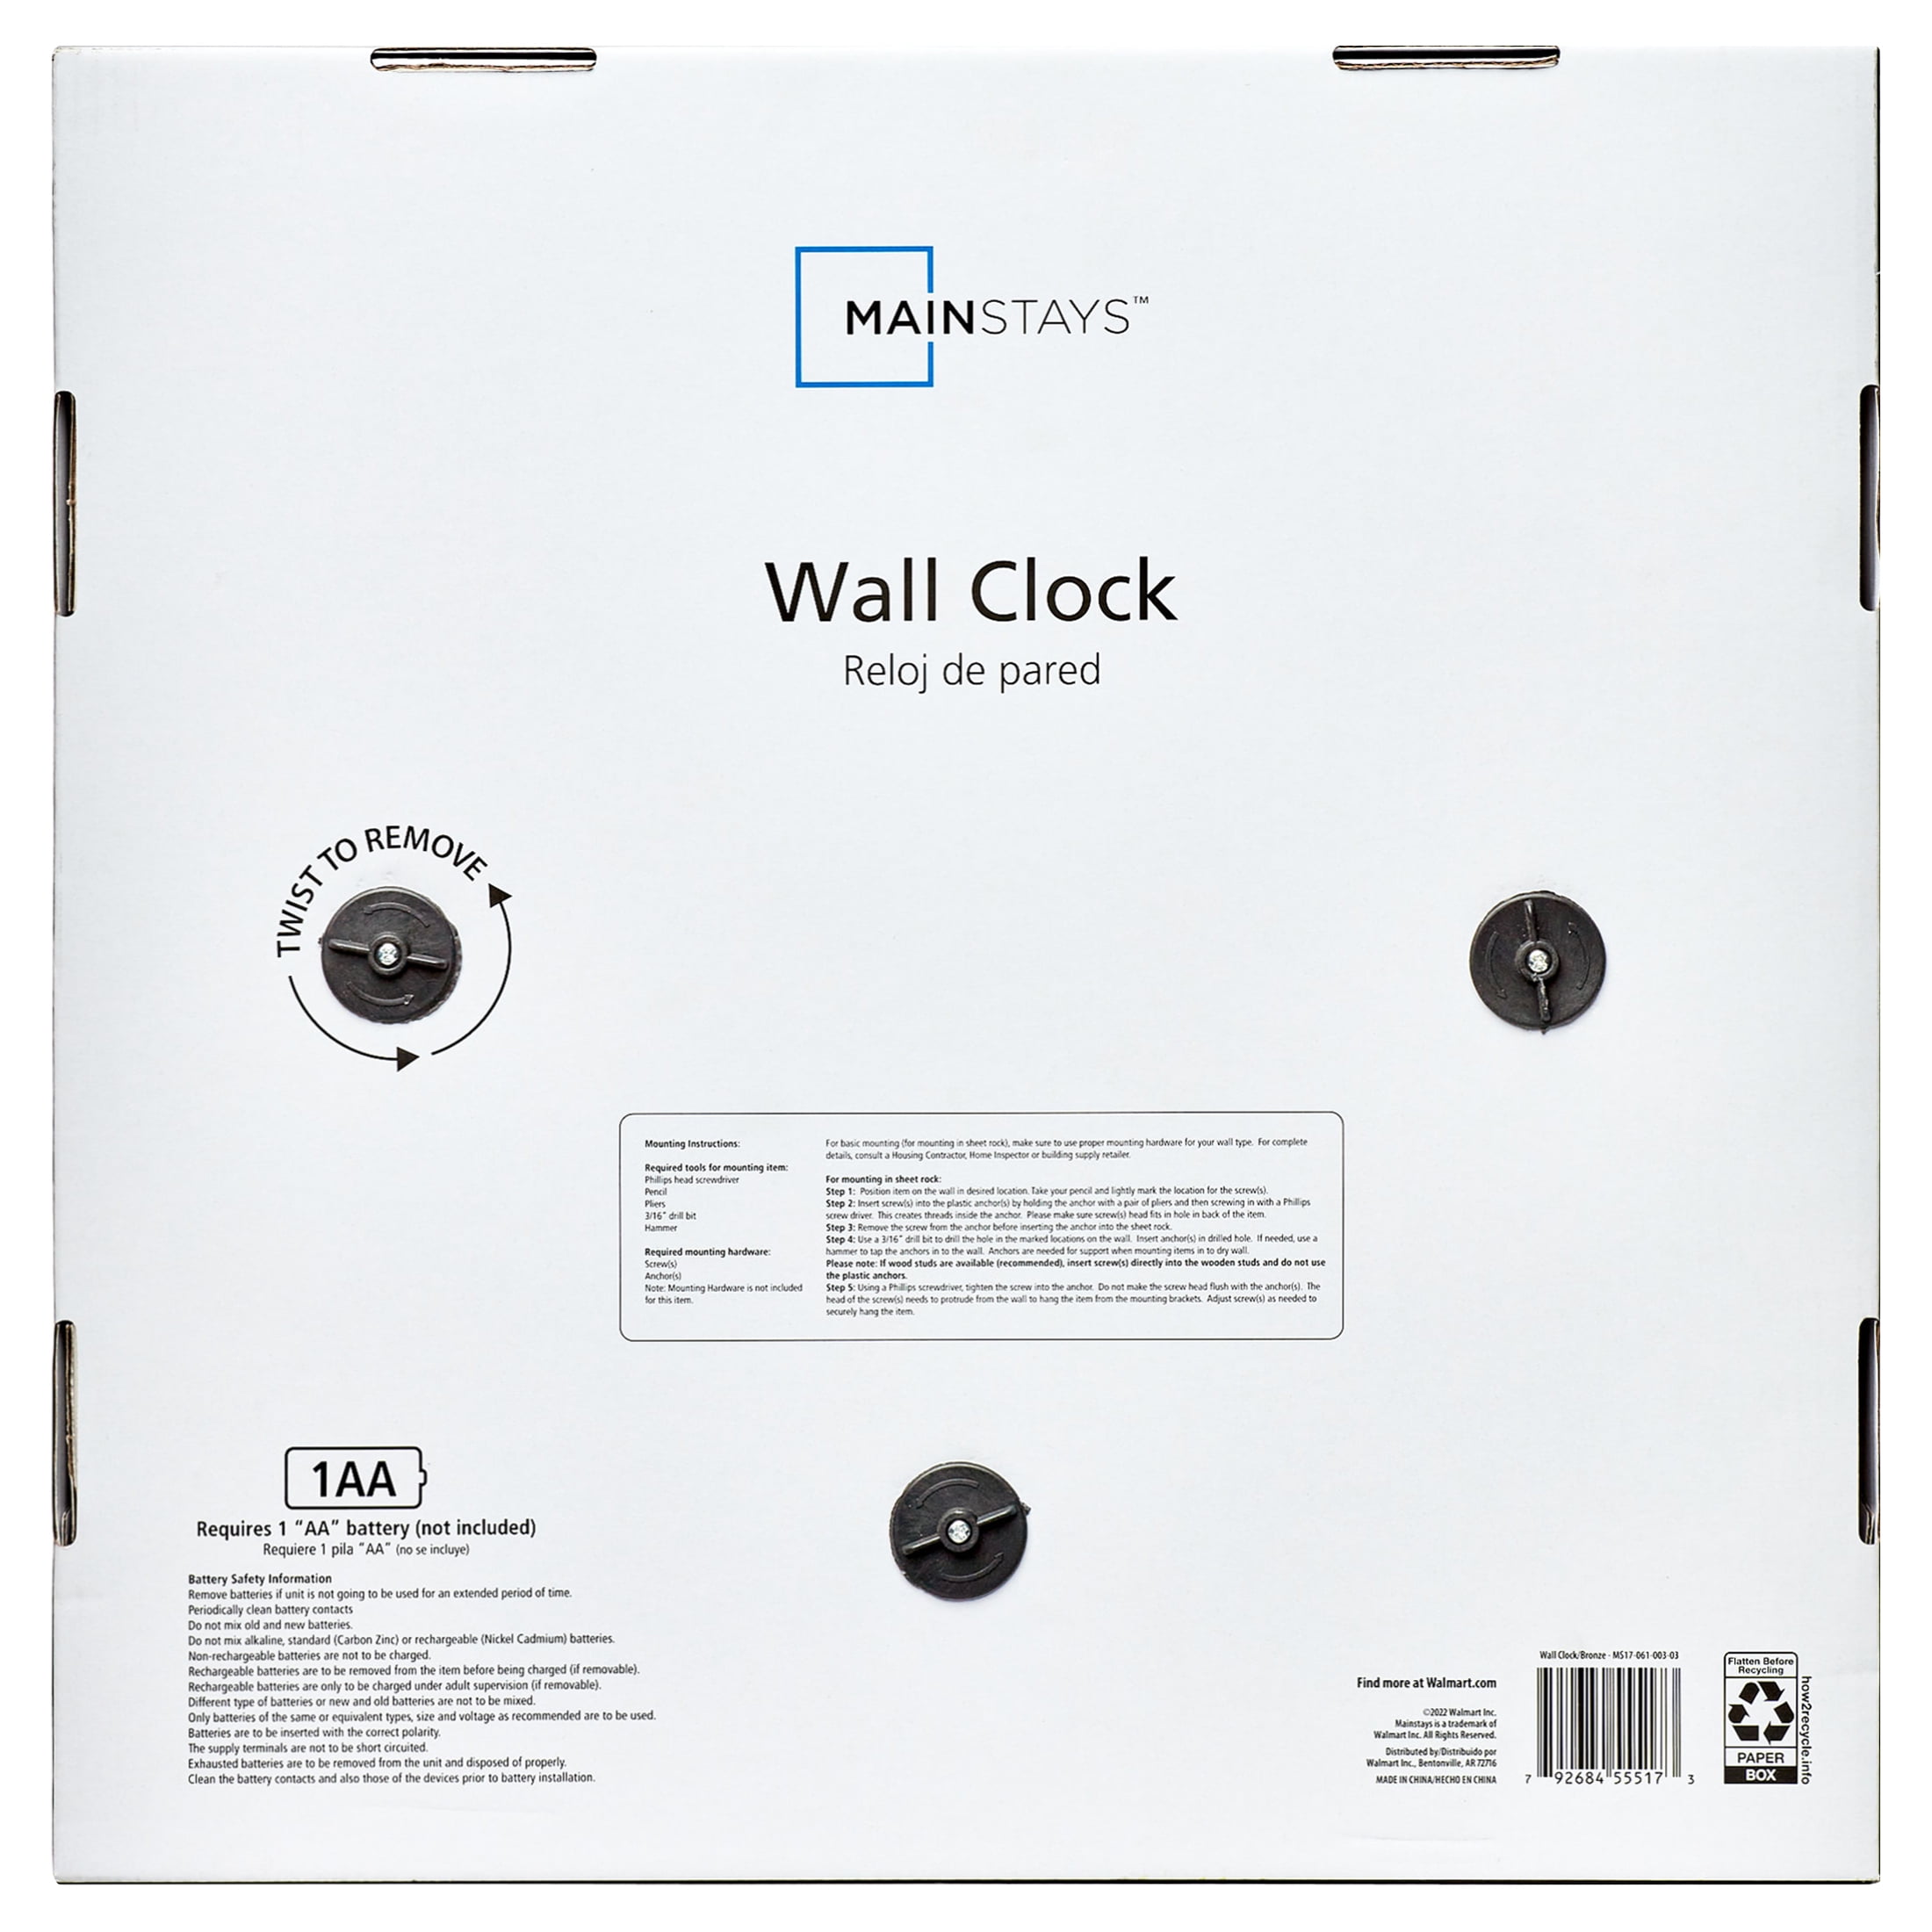 Industrial Gear Wall Clock in Aged Bronze